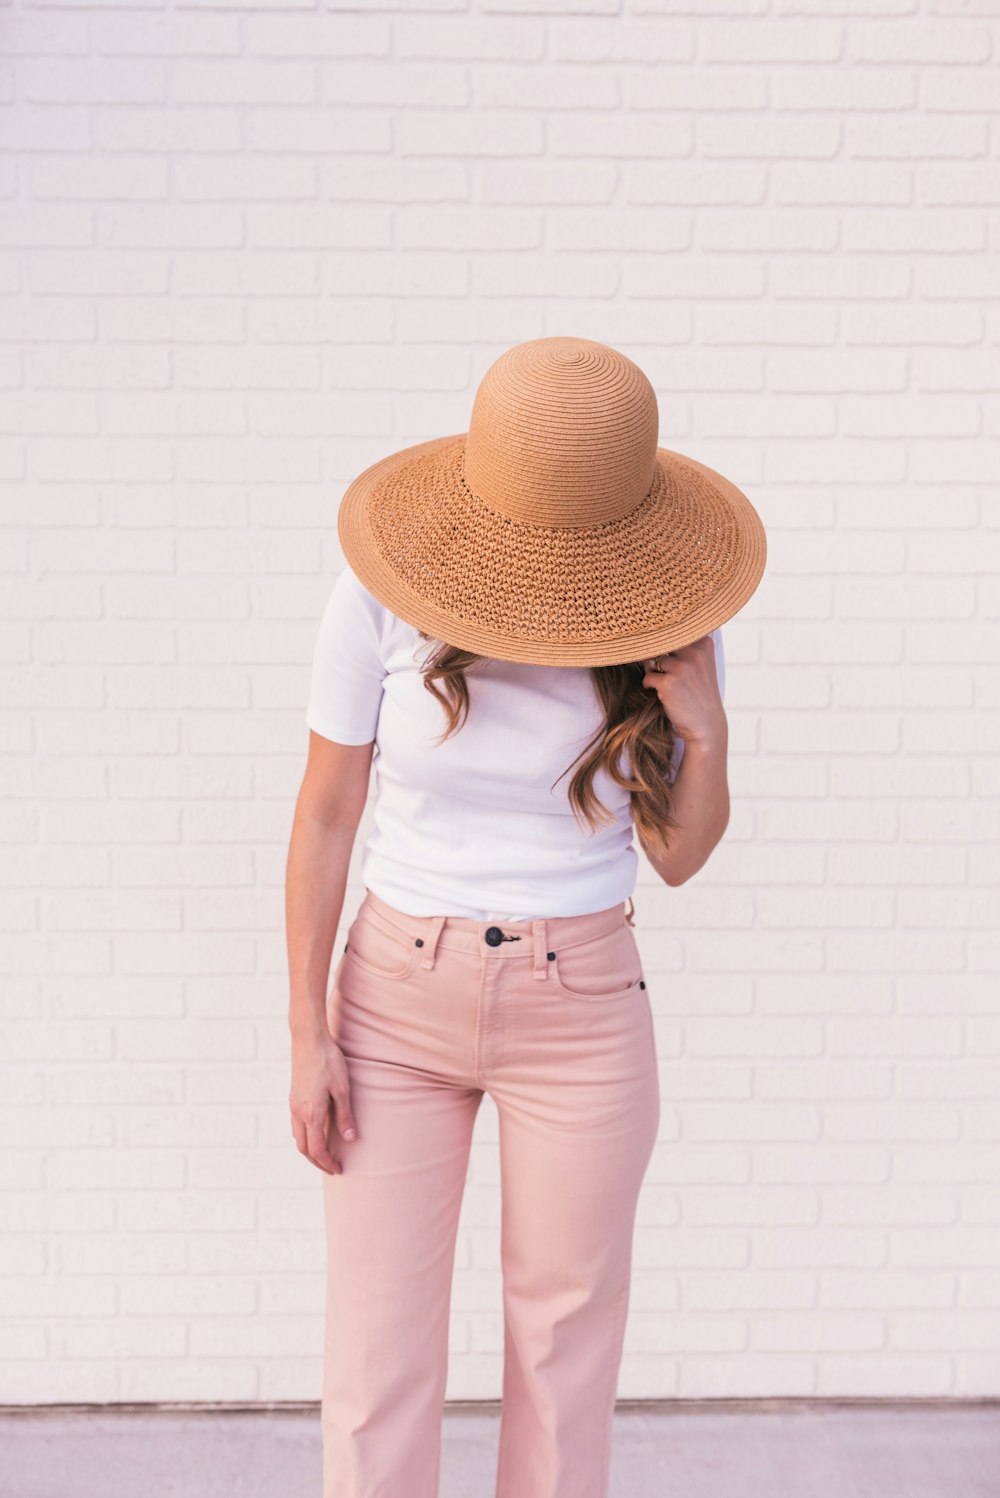 Woman wearing white shirt, pink pants, and brown sun hat photo